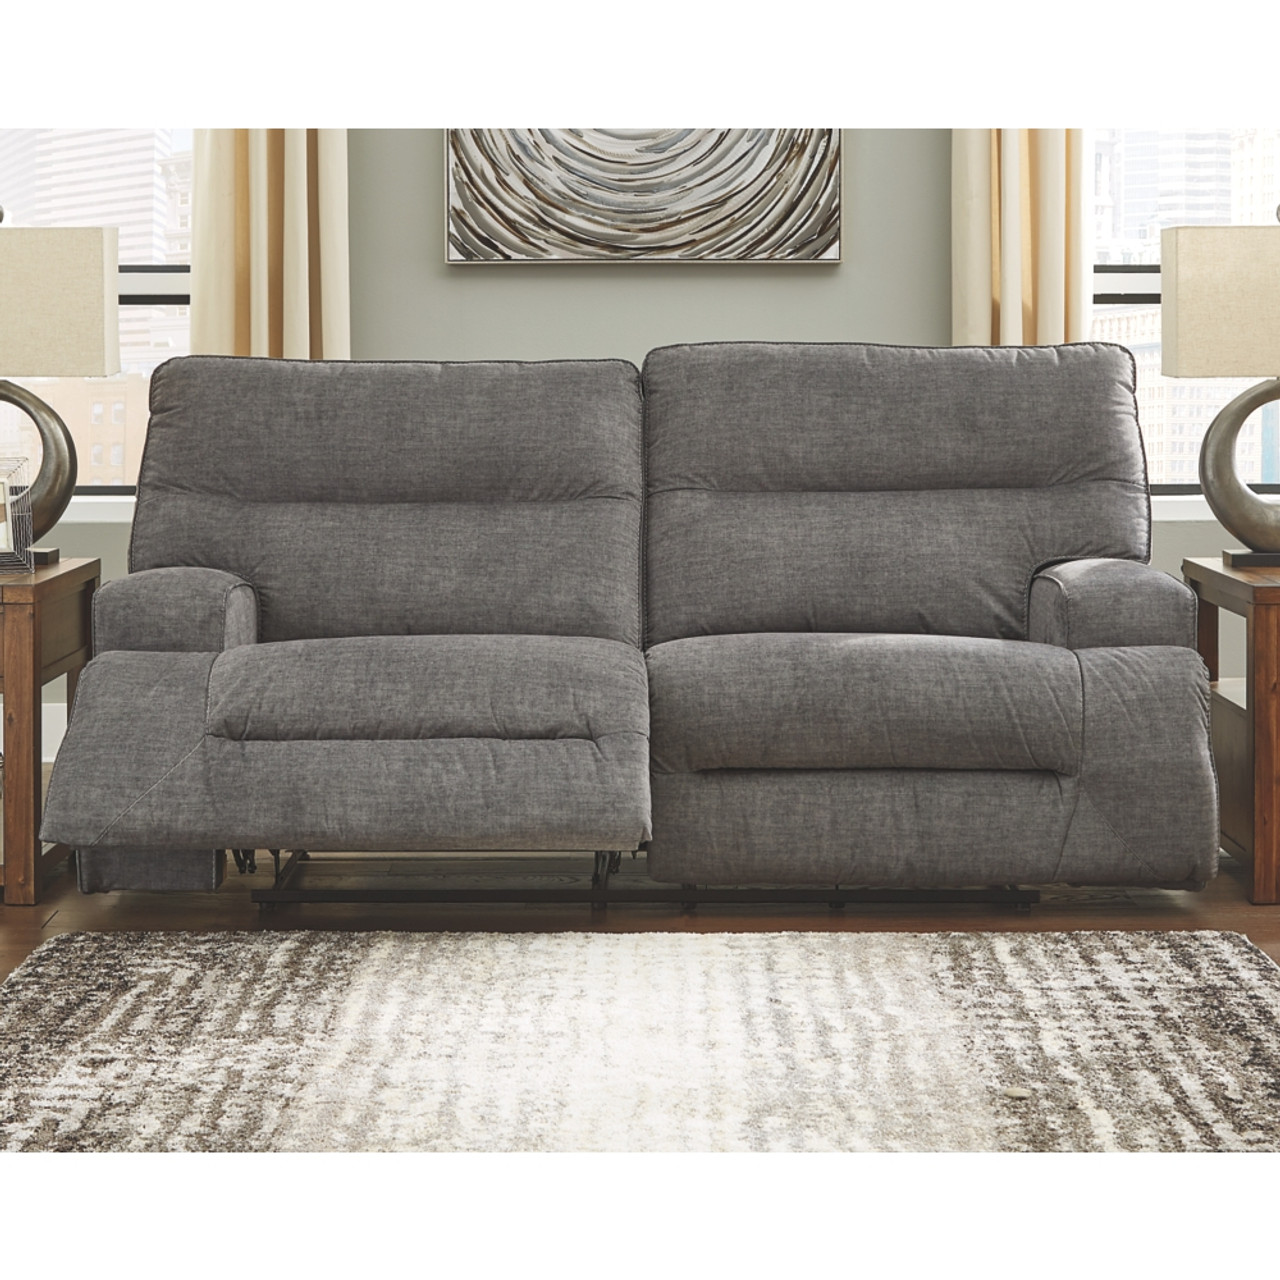 double recliner sofa